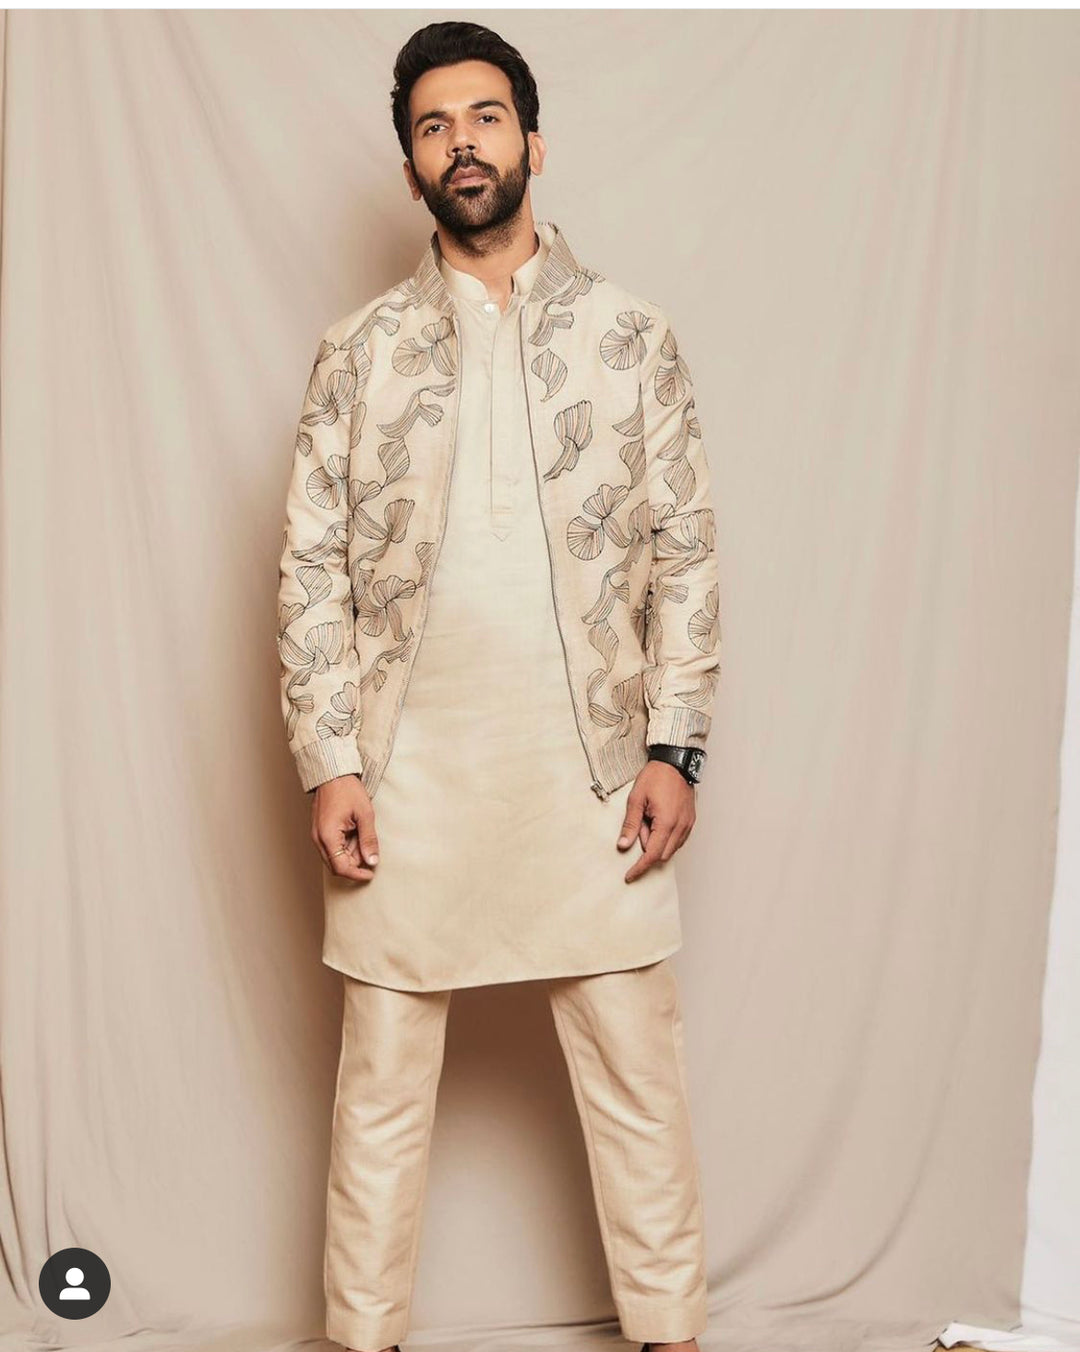 Rajkumar Rao In Our I & You - Beige Embroidered Bomber Jacket set